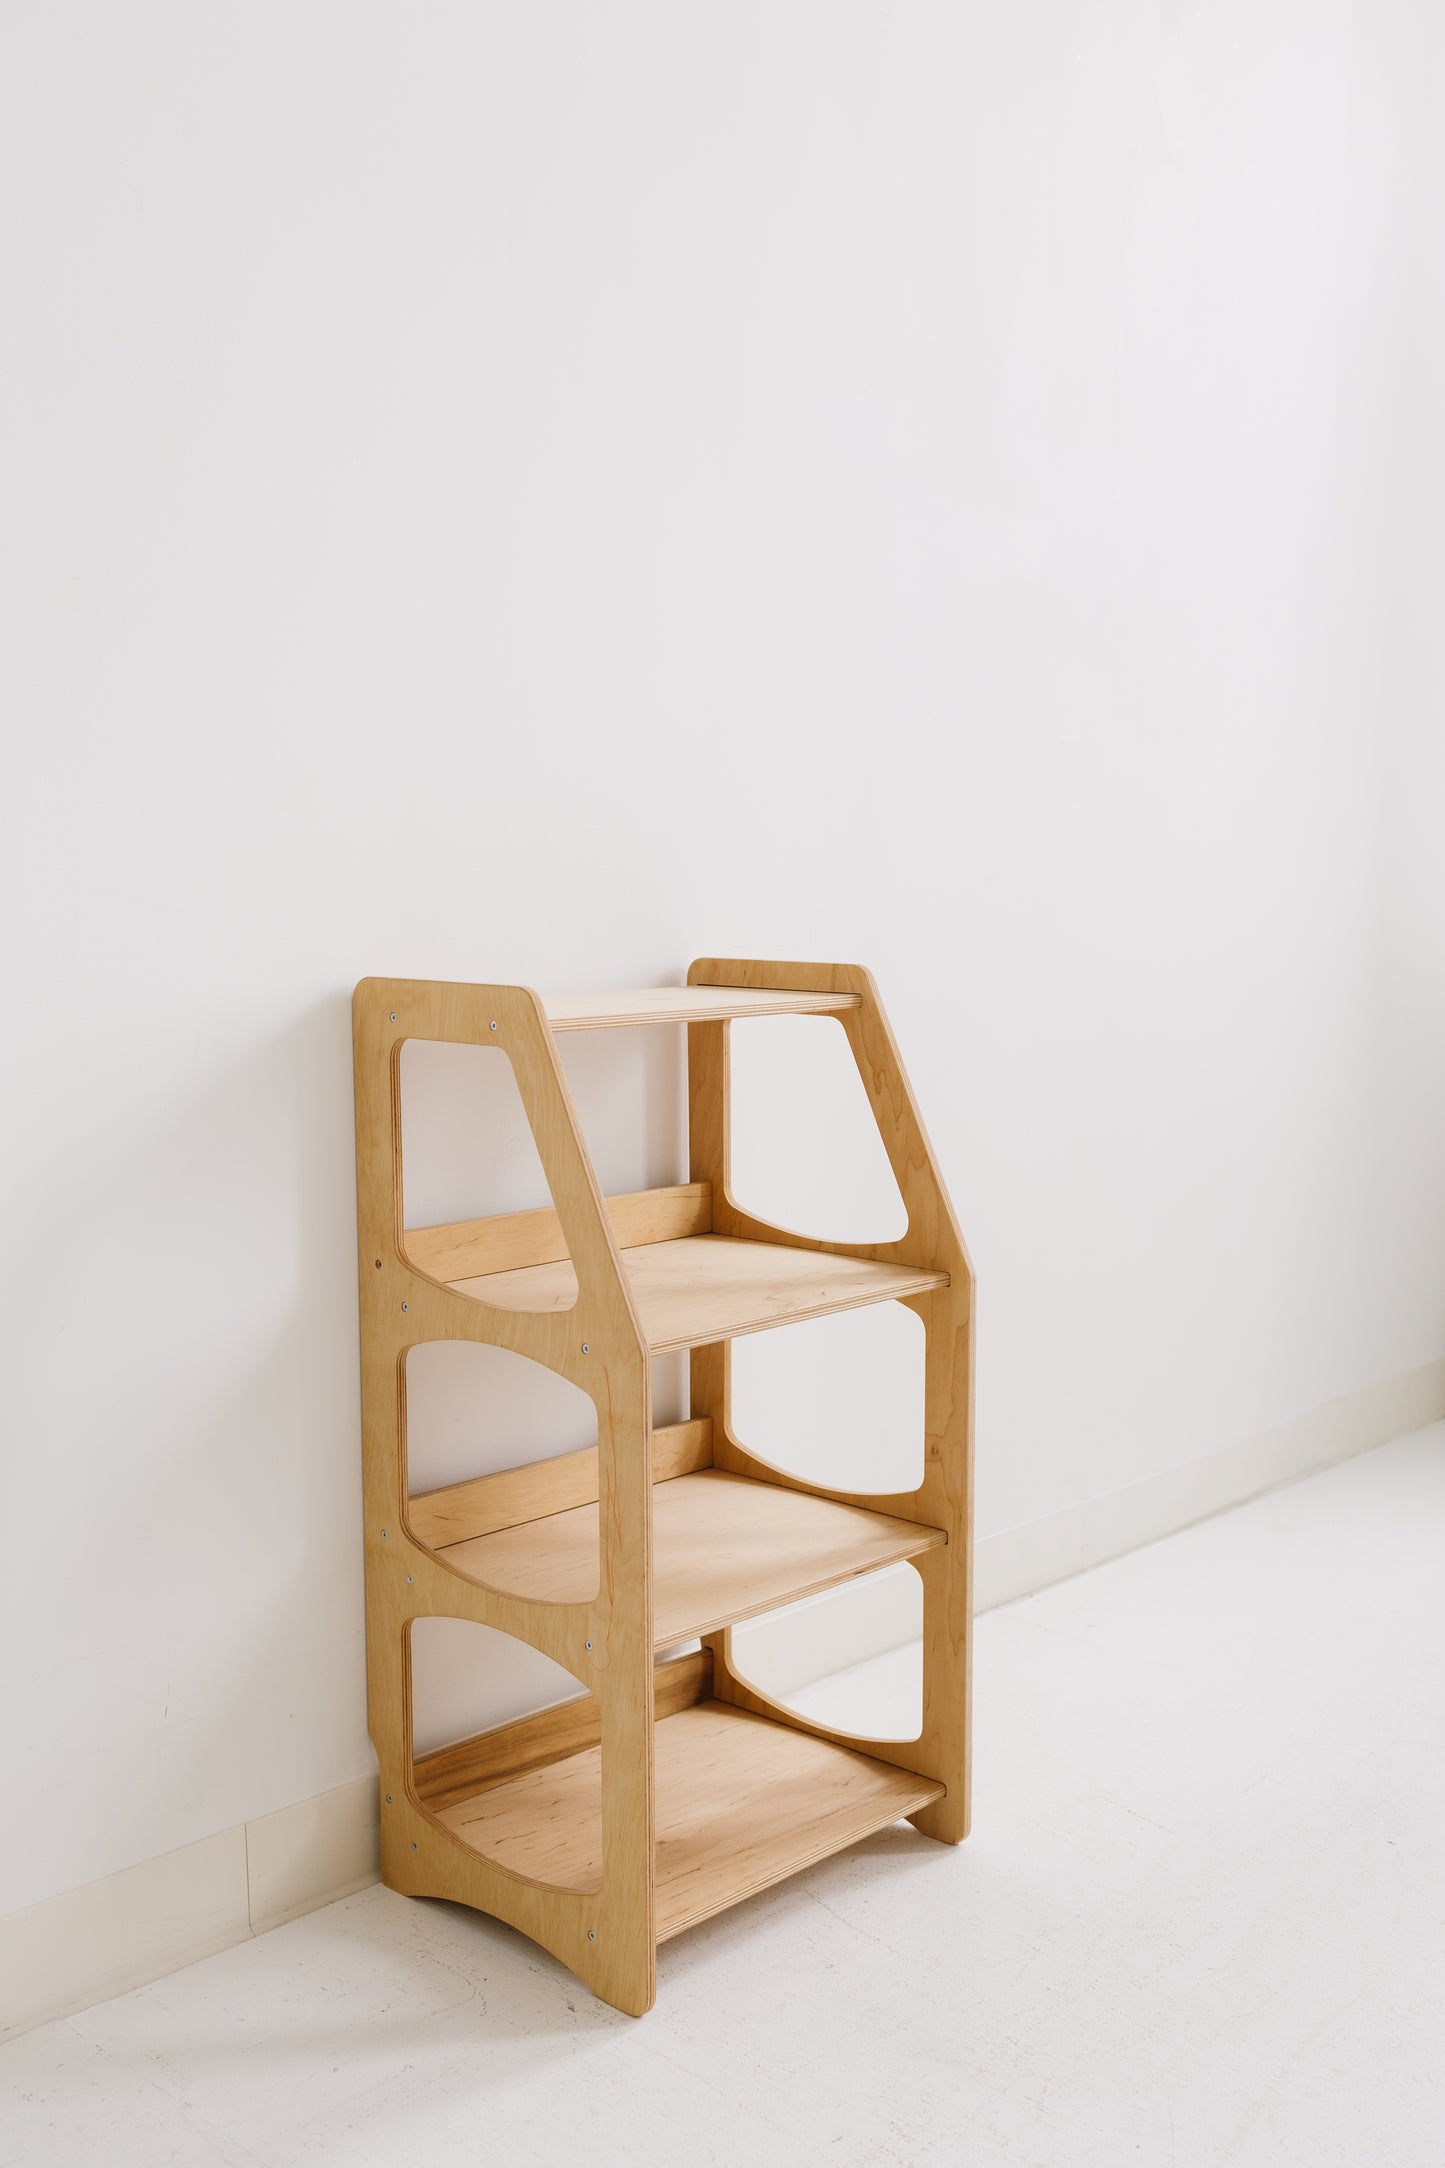 Montessori wooden shelf